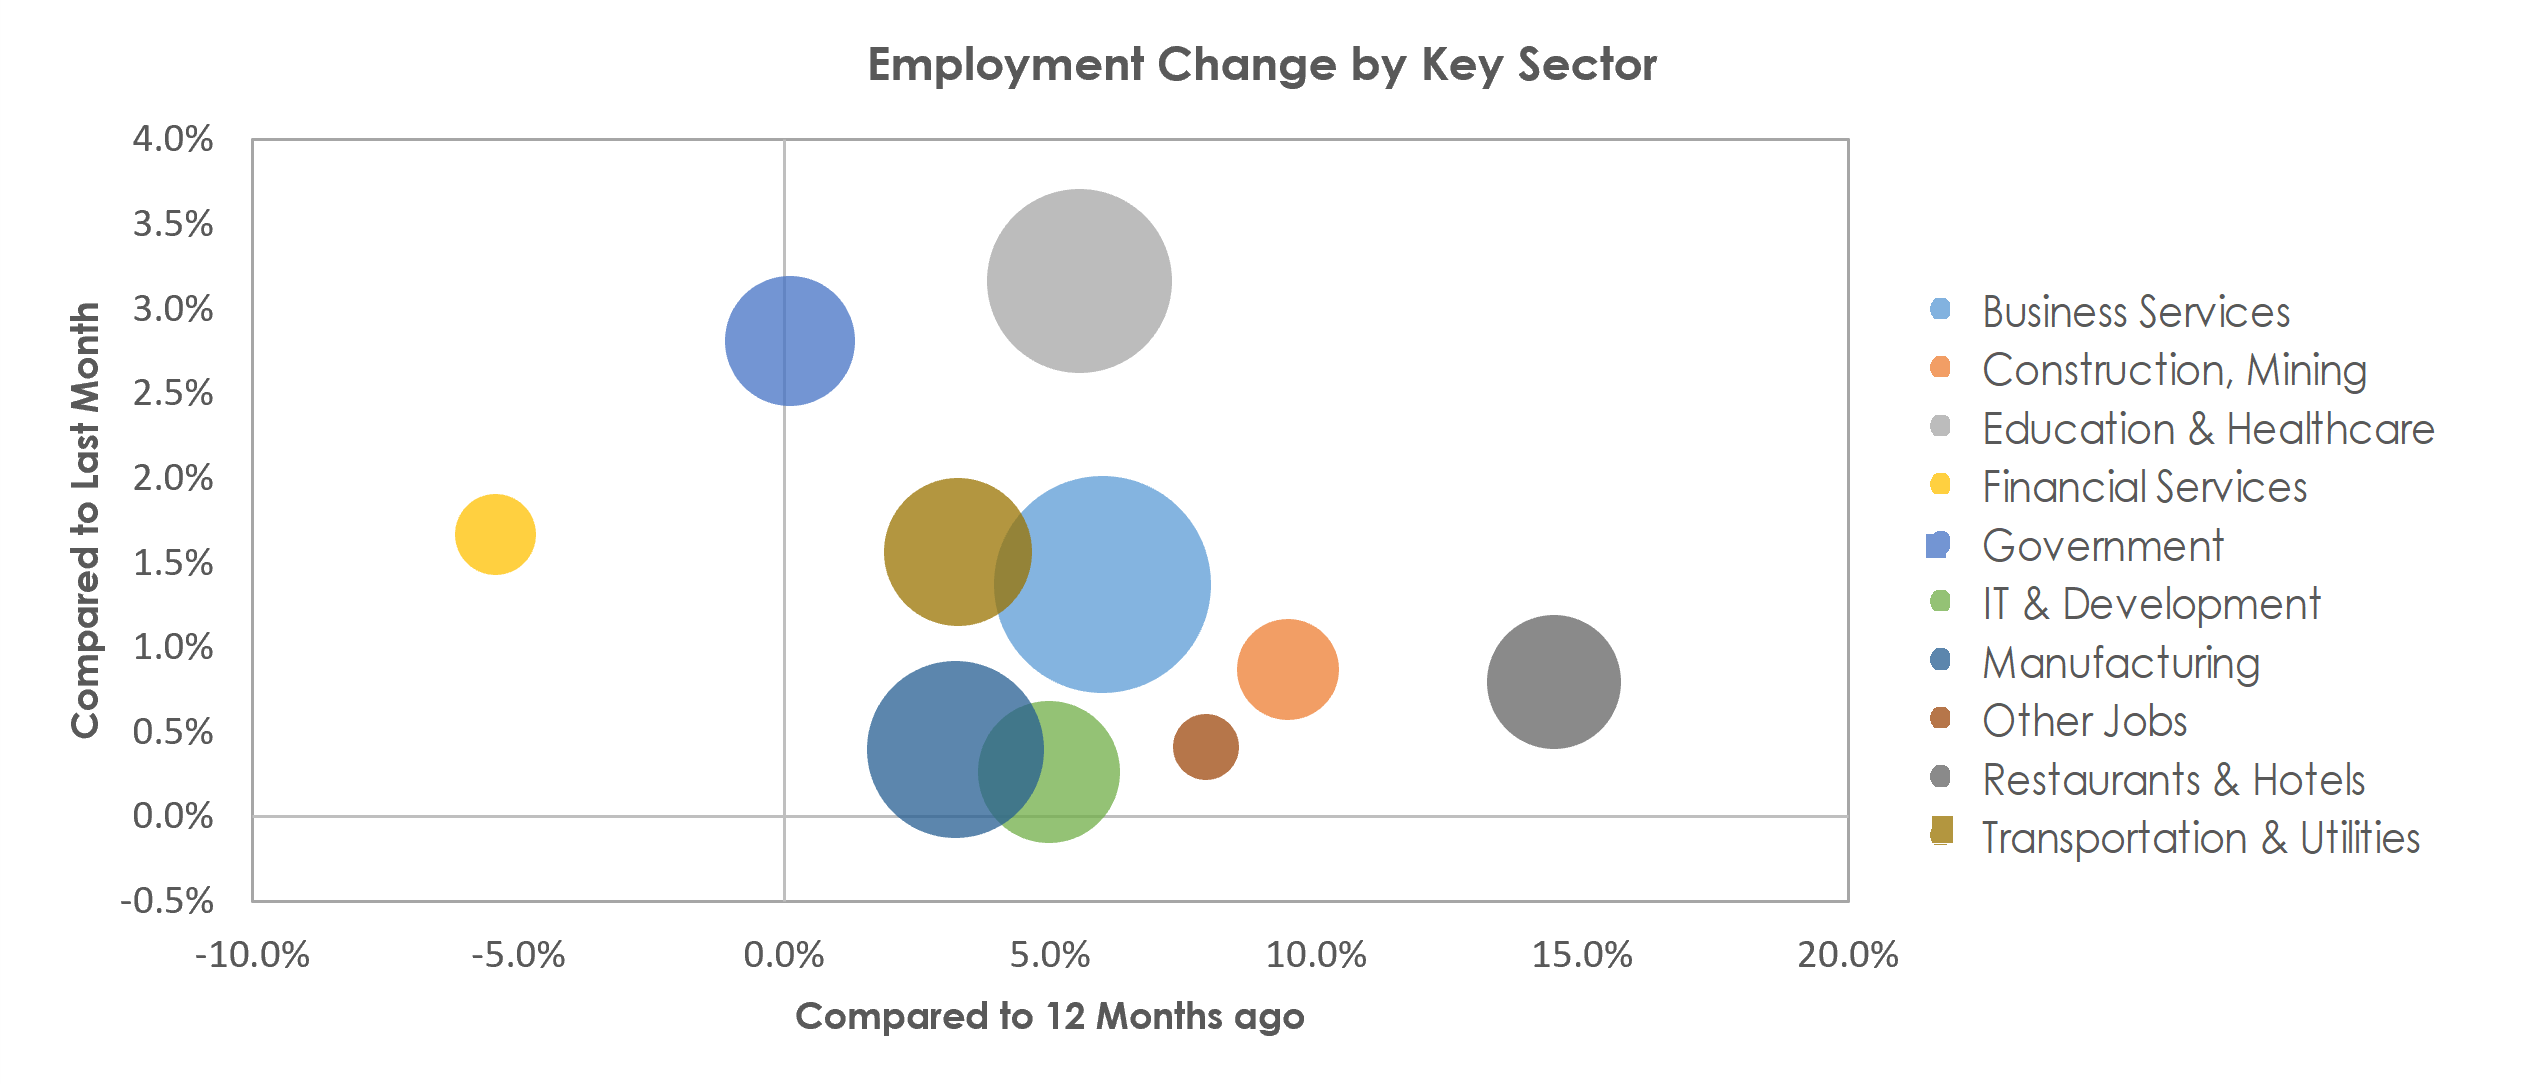 San Jose-Sunnyvale-Santa Clara, CA Unemployment by Industry October 2022